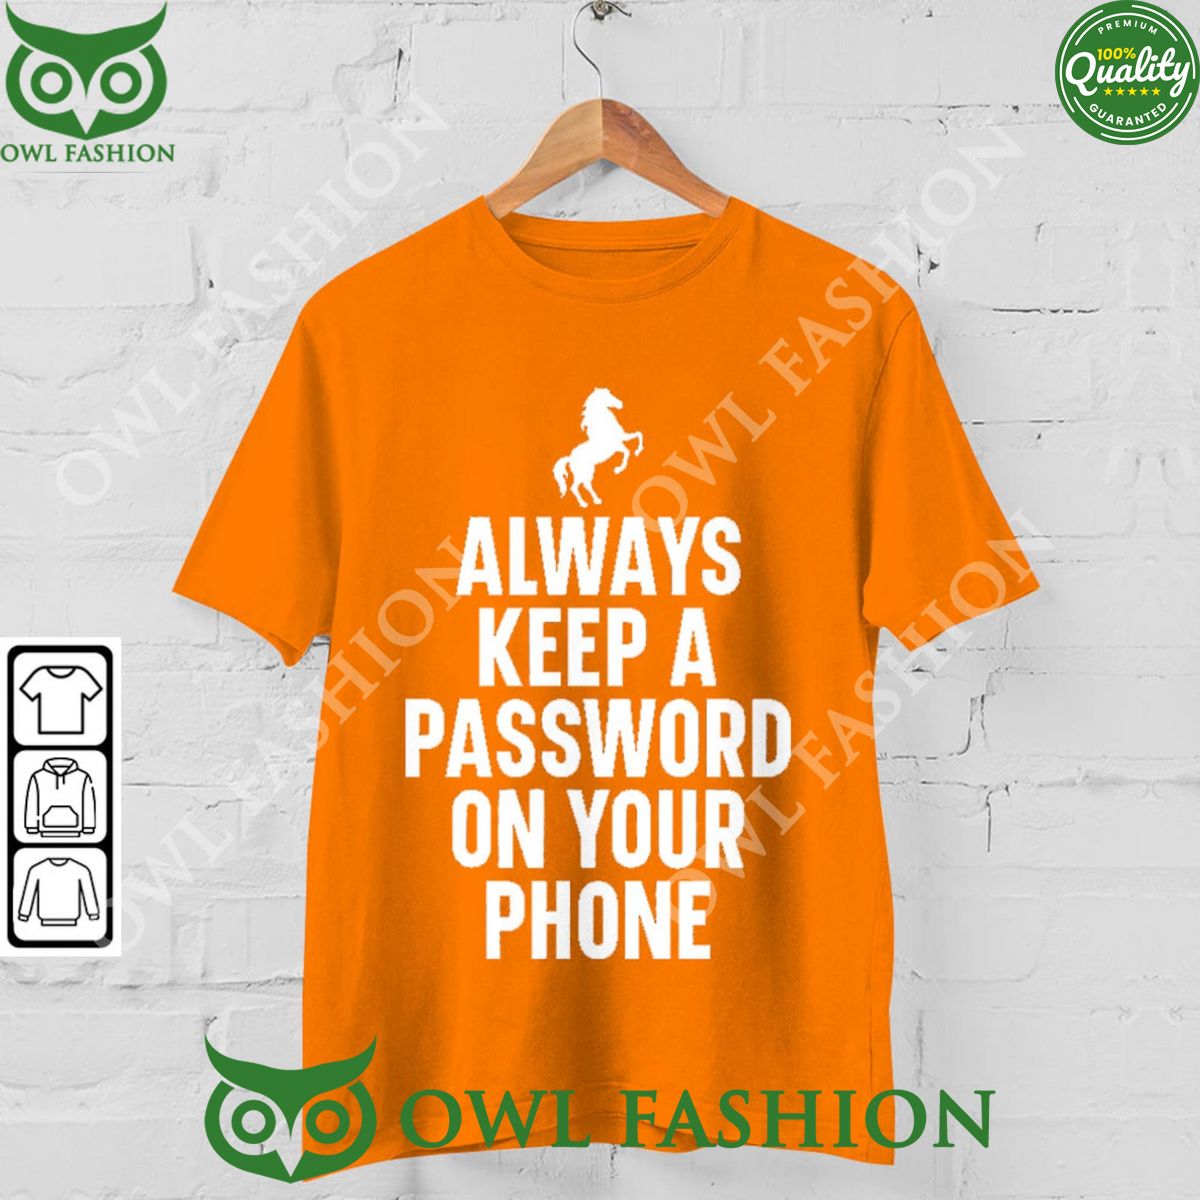 horsevideo orange shirt mounting man keep a password on your phone 1 2pZkm.jpg